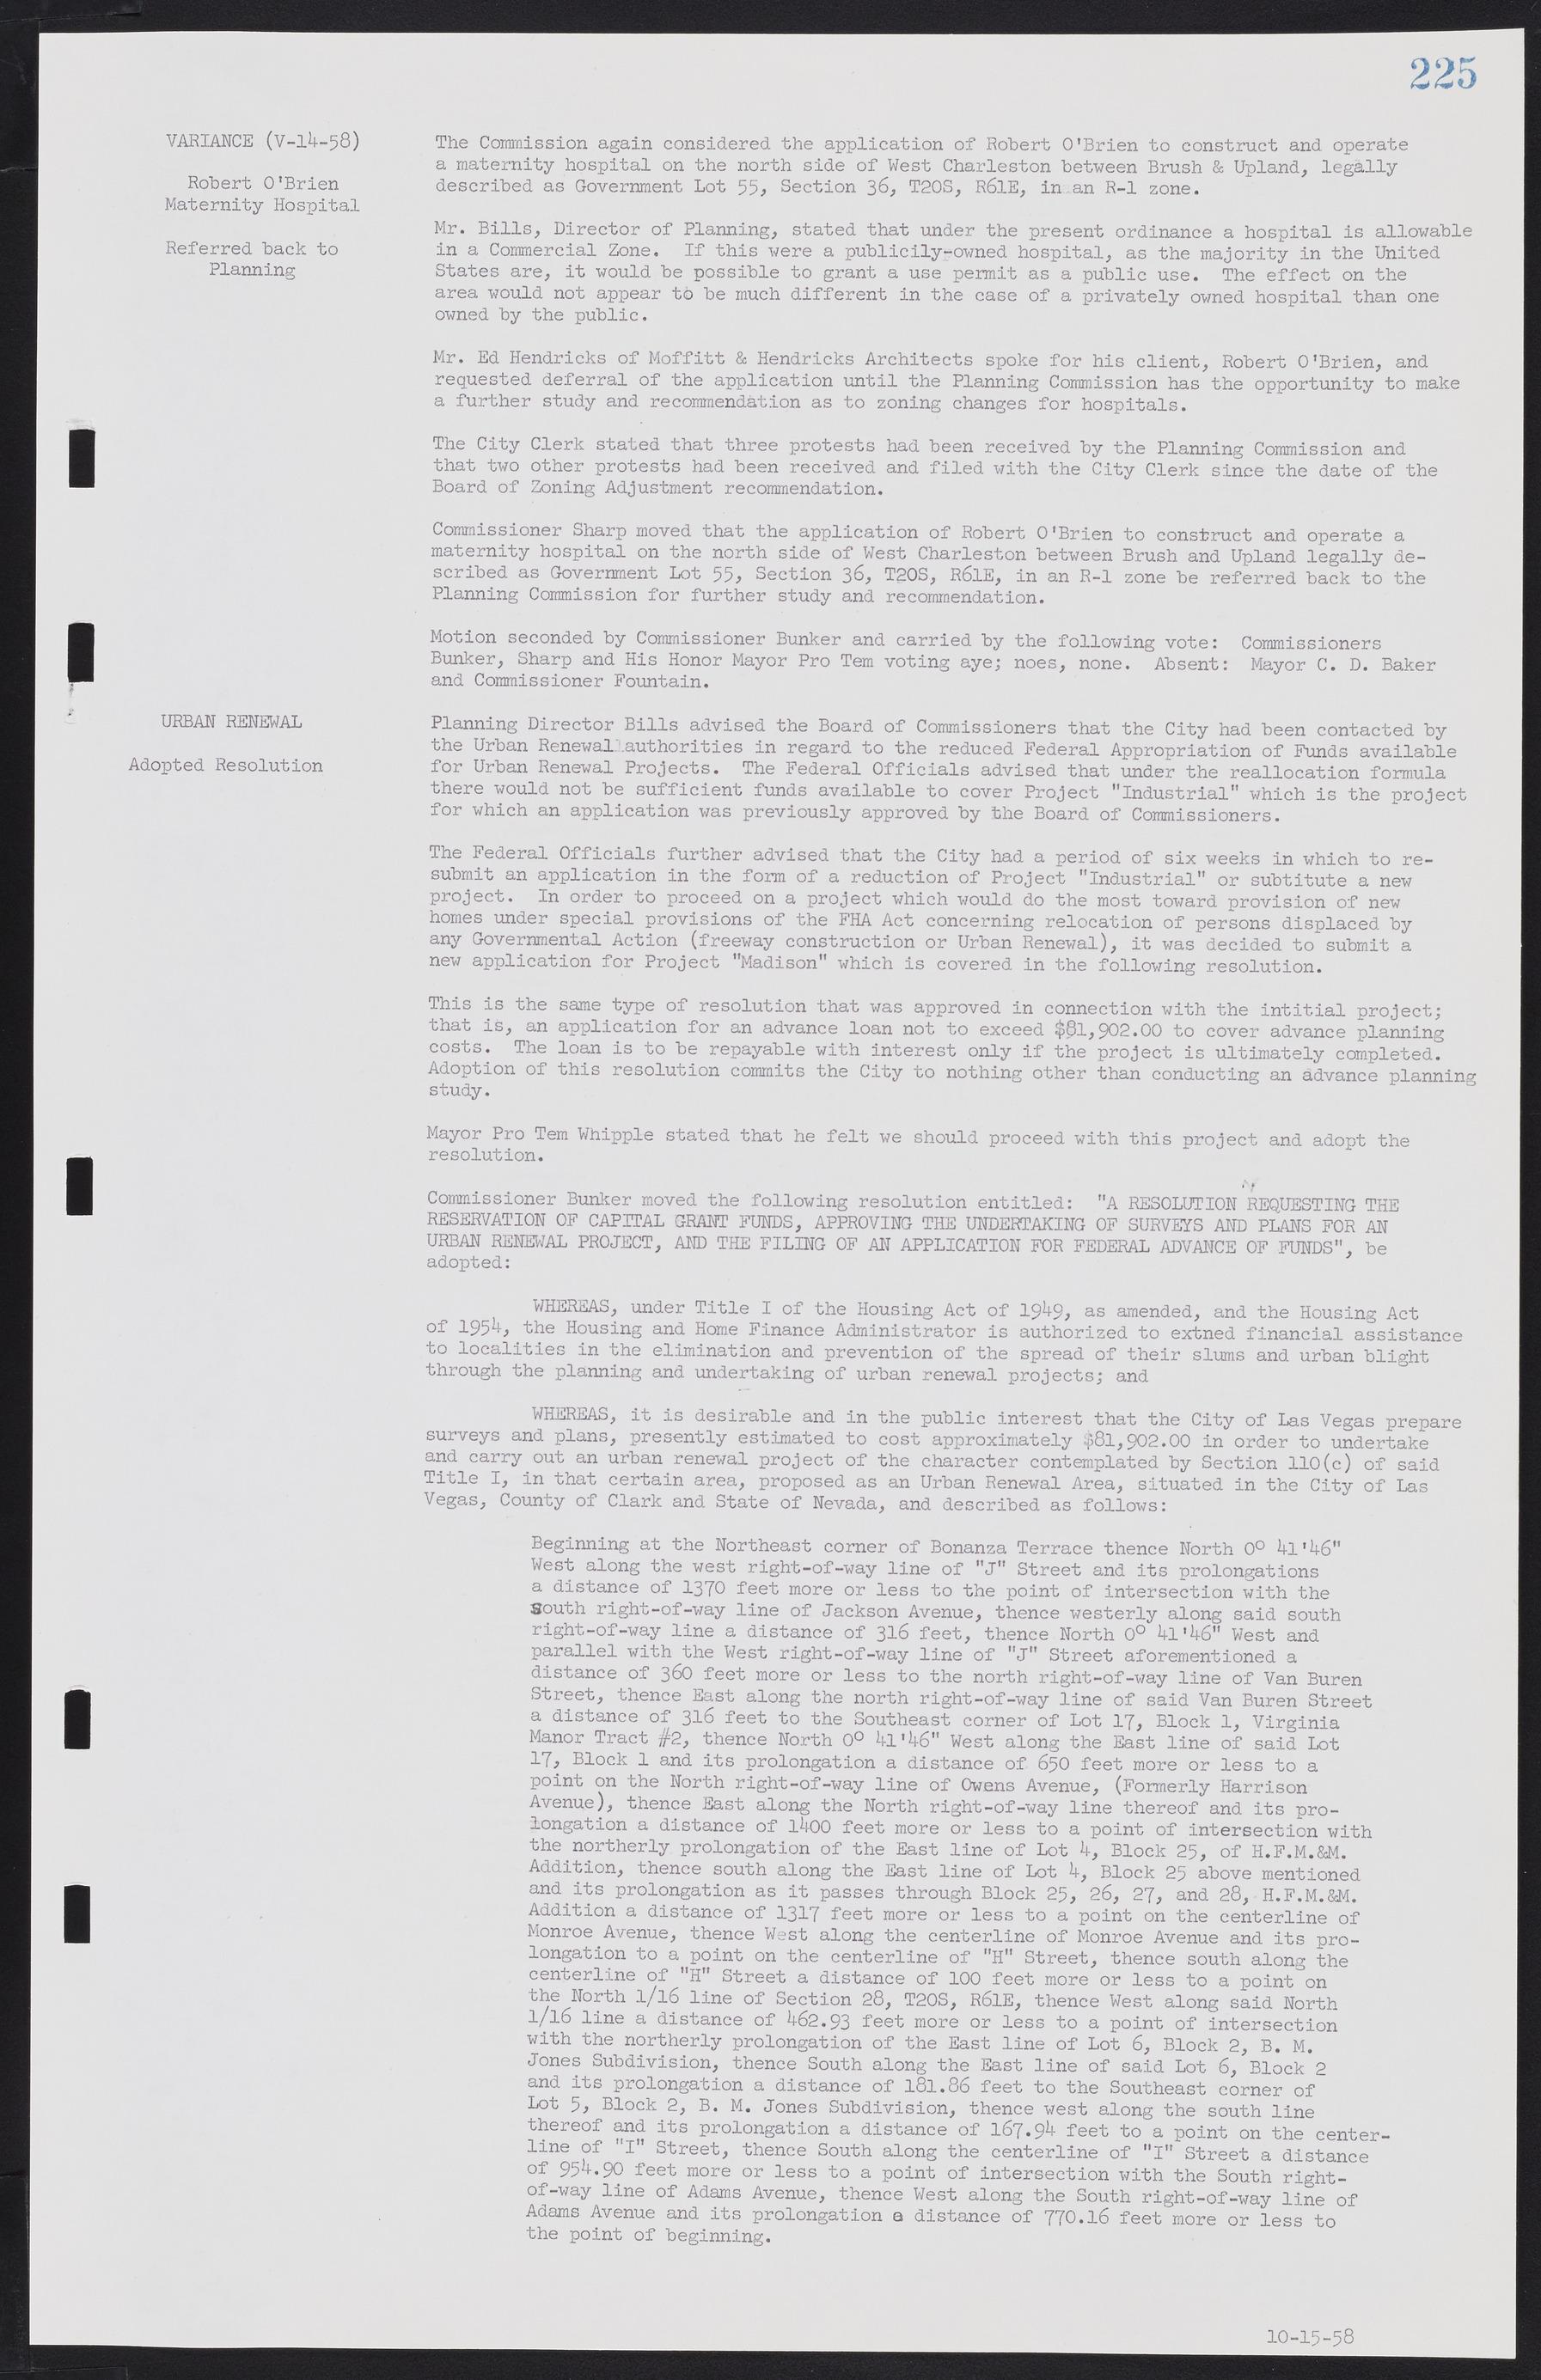 Las Vegas City Commission Minutes, November 20, 1957 to December 2, 1959, lvc000011-231